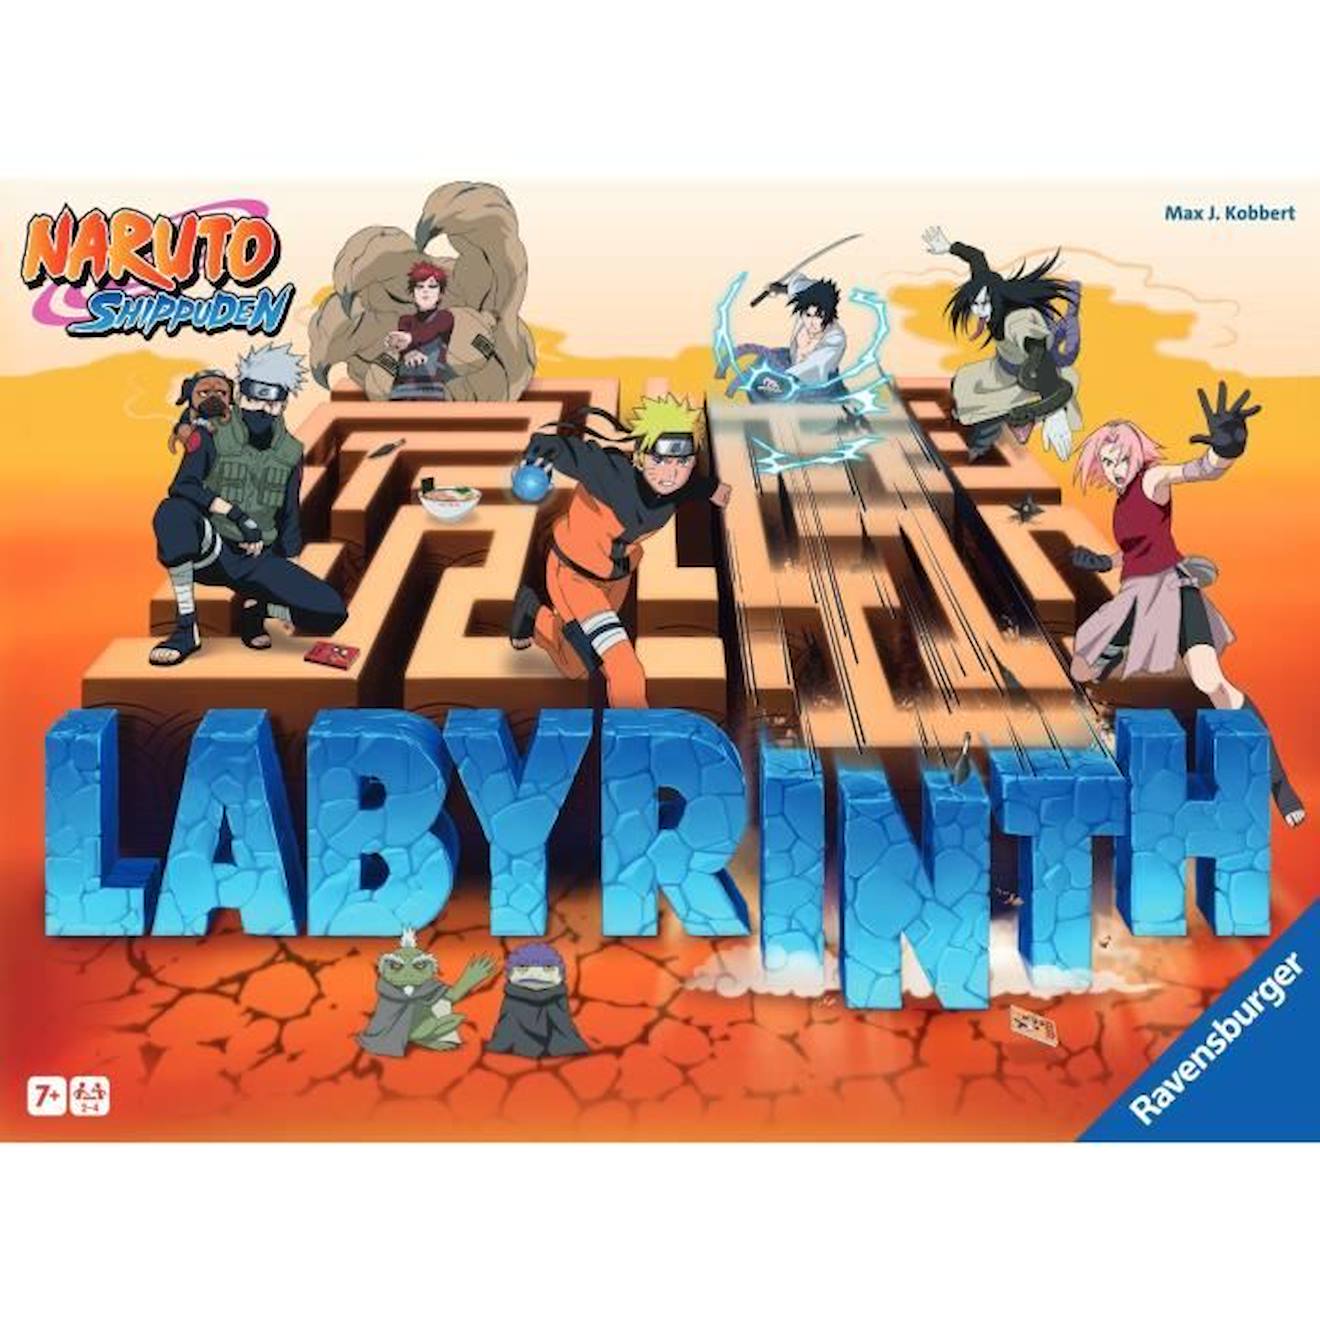 Labyrinthe Naruto - Jeux De Société - Naruto Shippuden - Dès 7 Ans - Ravensburger Blanc